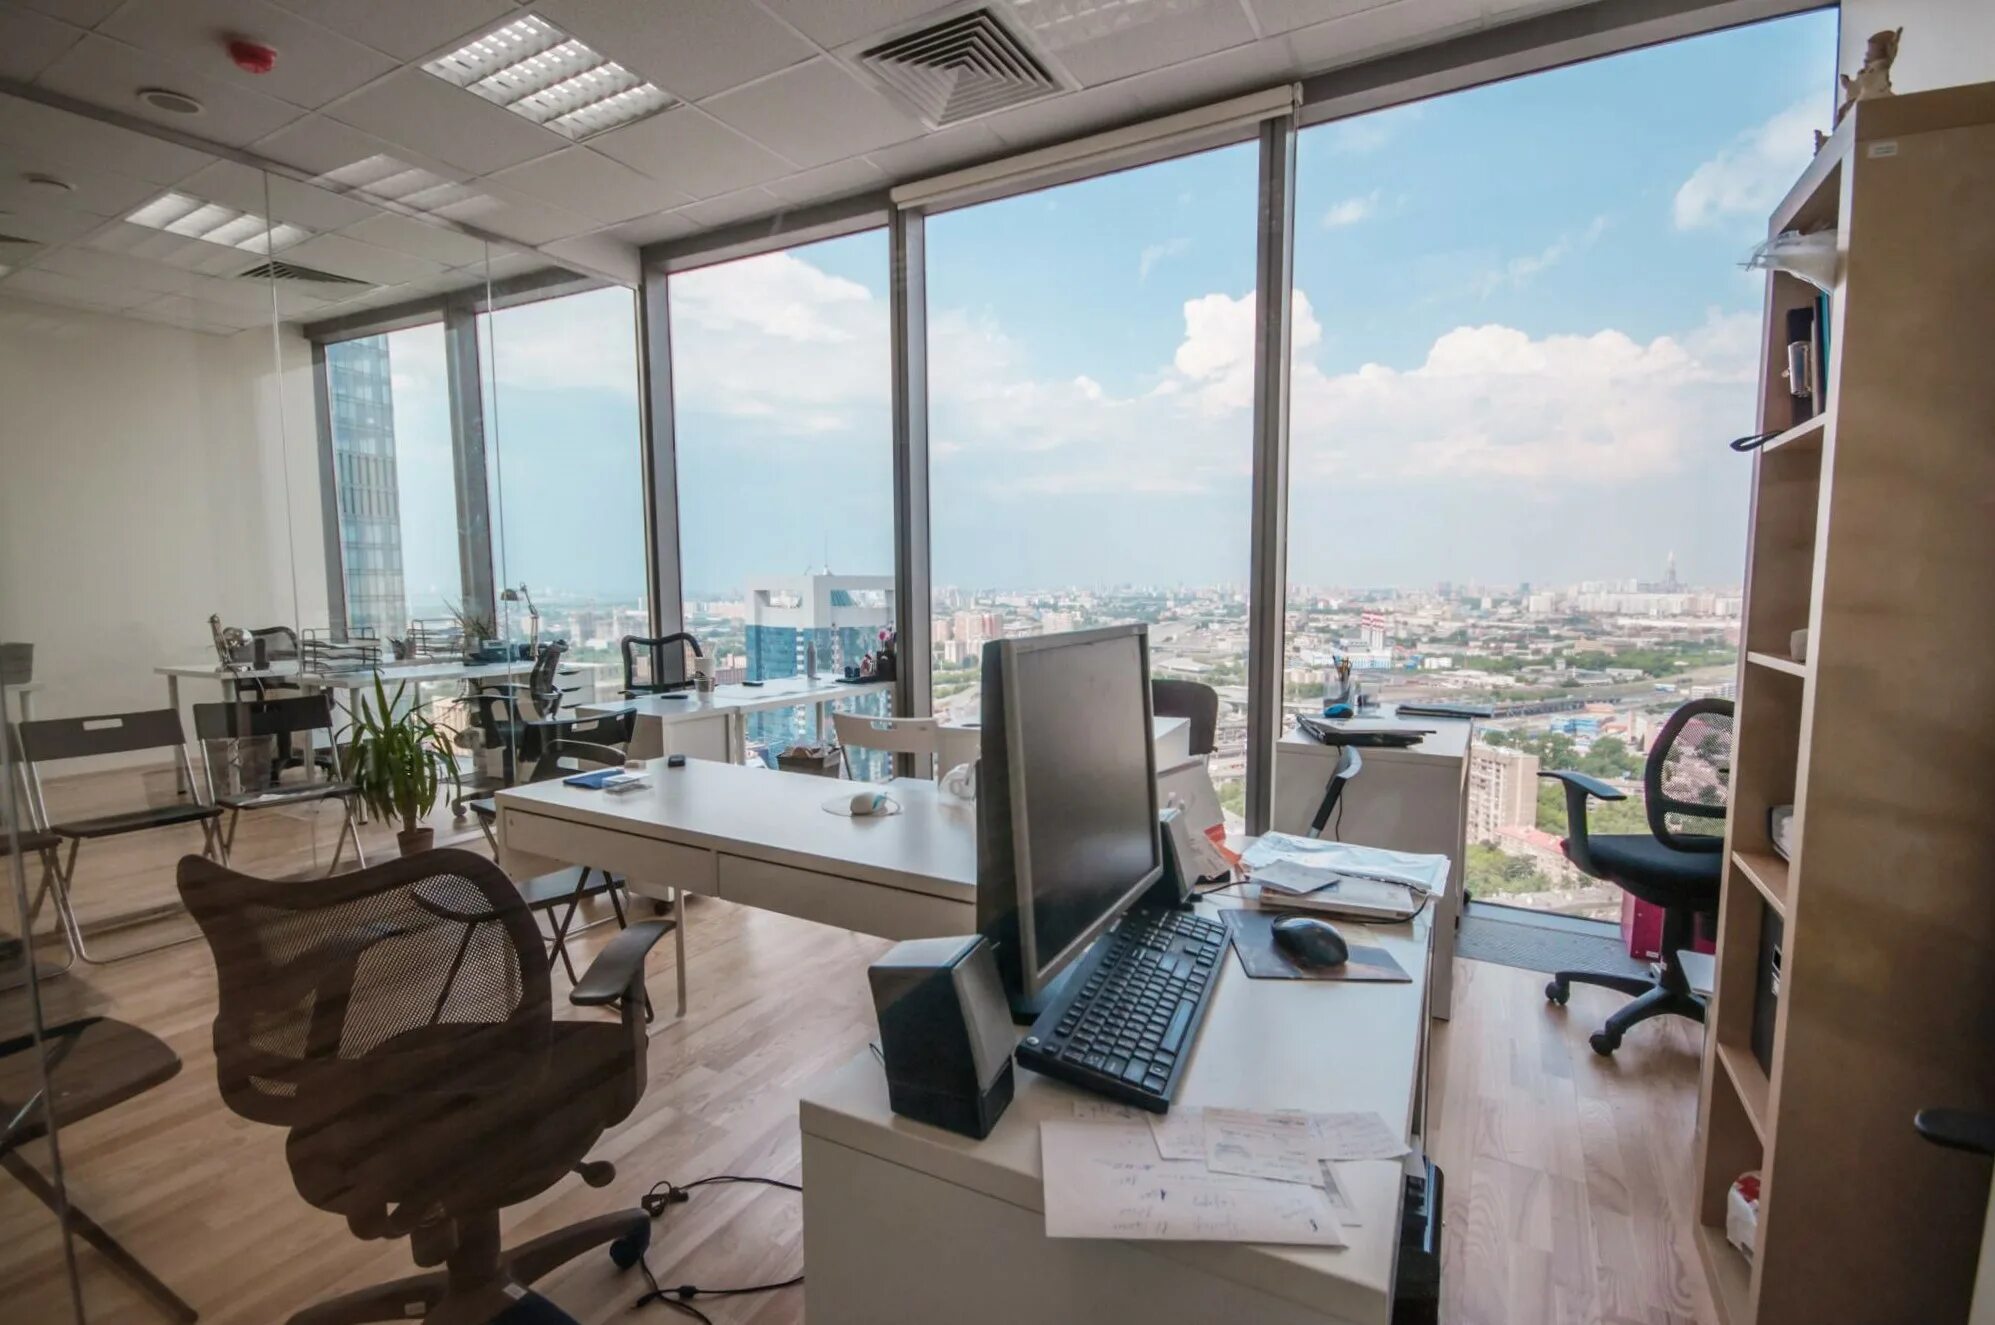 Продажа офис сити. Офис в Москва Сити 608м2. БЦ око 2 Москва Сити. Офис с панорамными окнами. Офис с панорамным видом.